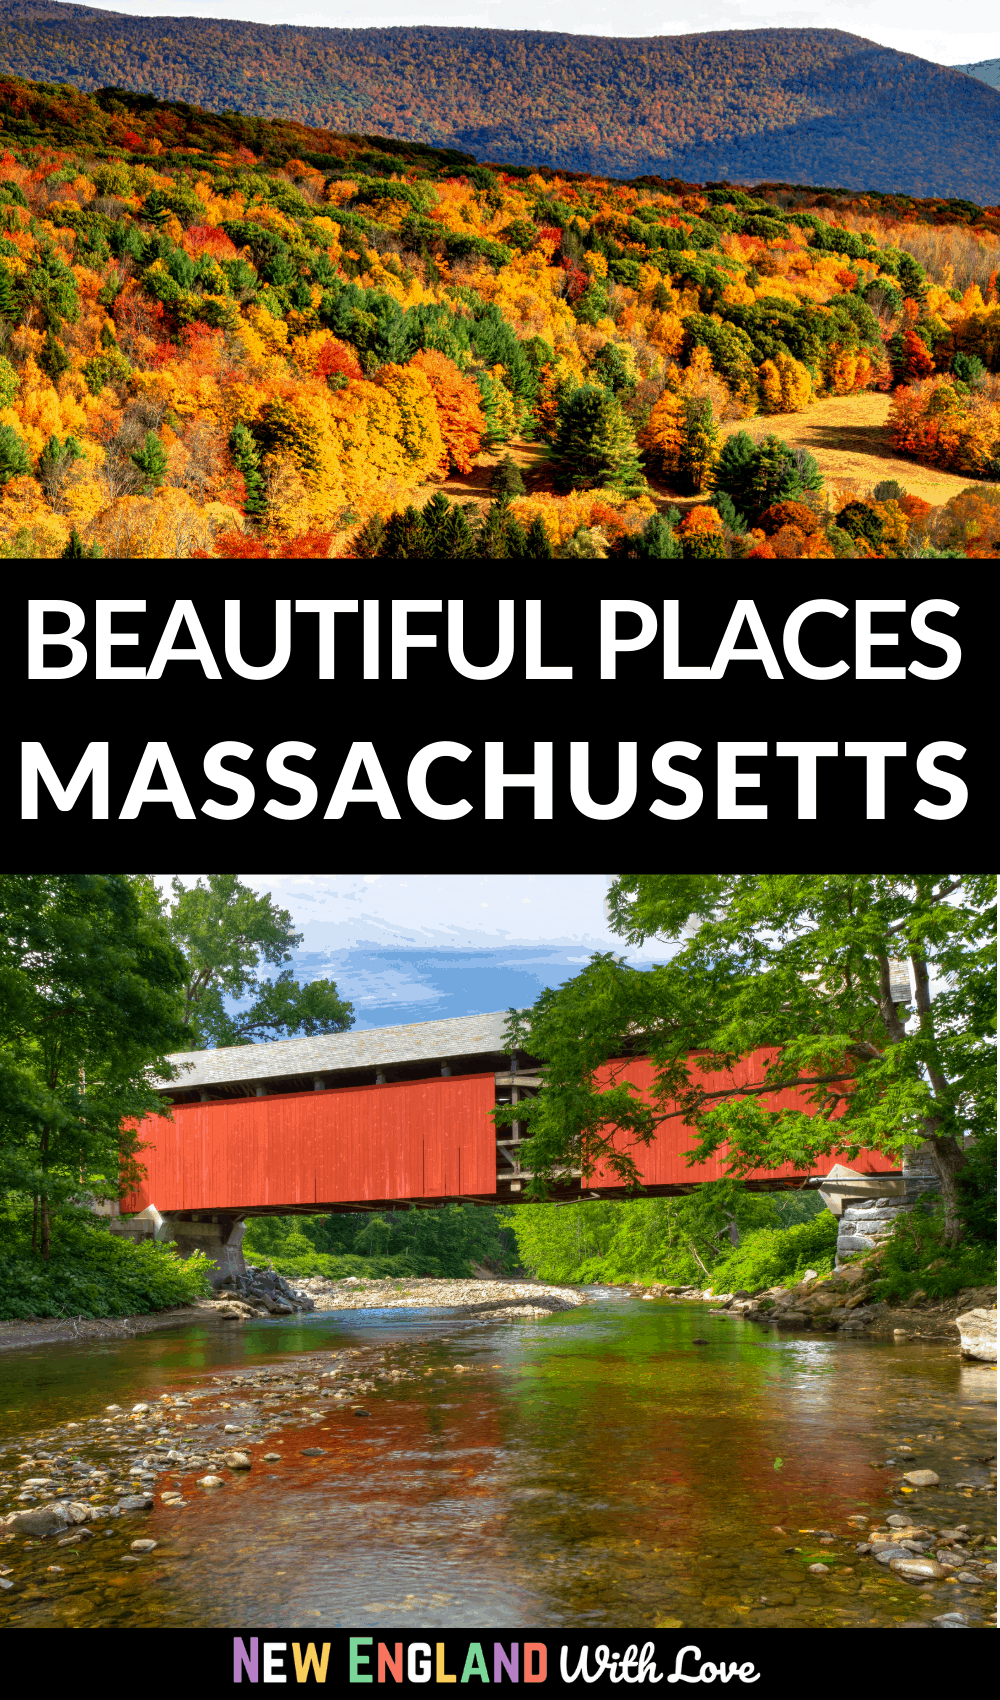 Pinterest graphic reading "BEAUTIFUL PLACES MASSACHUSETTS"